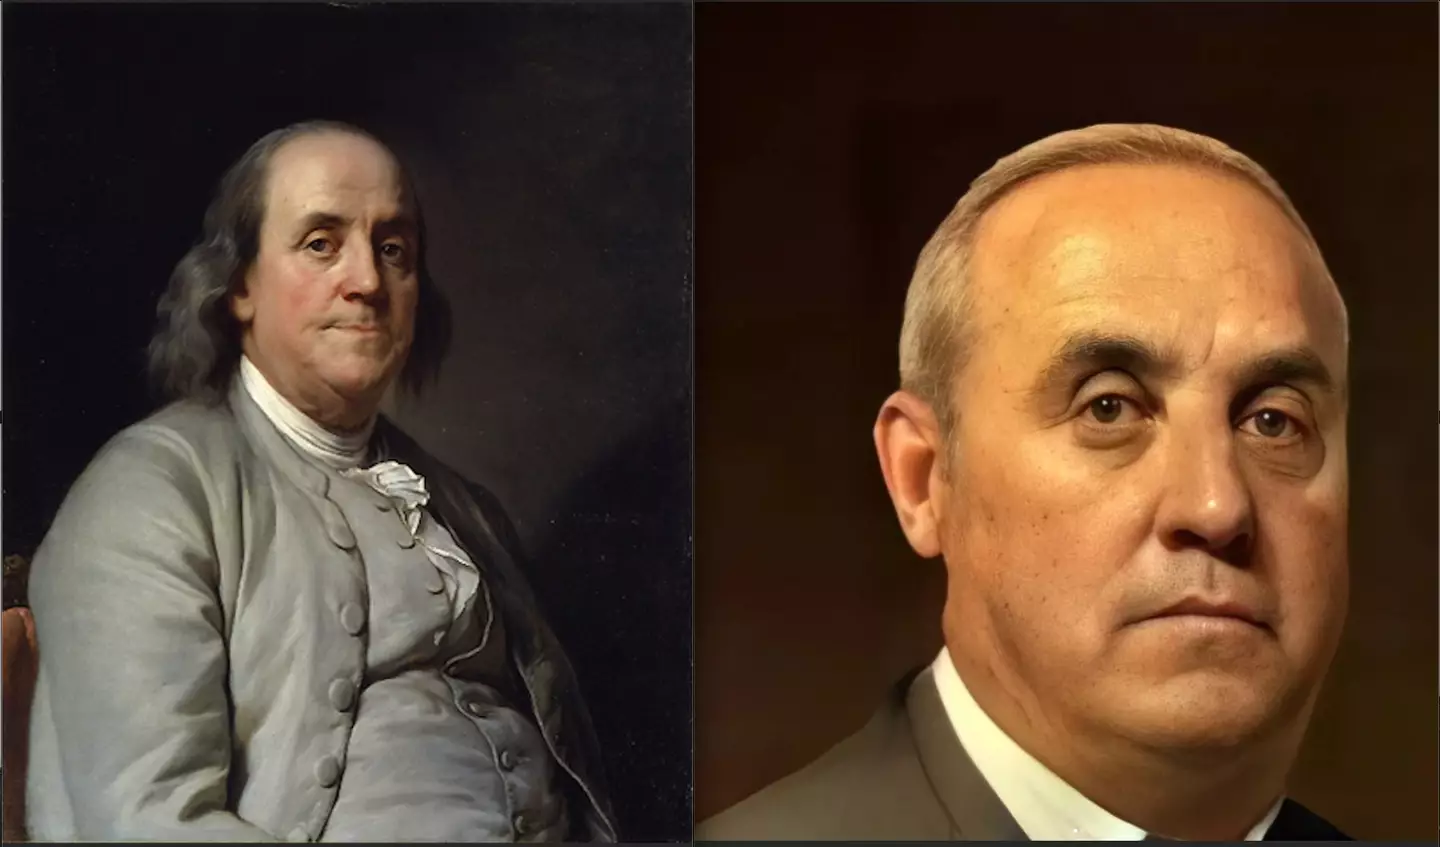 Ben Franklin.